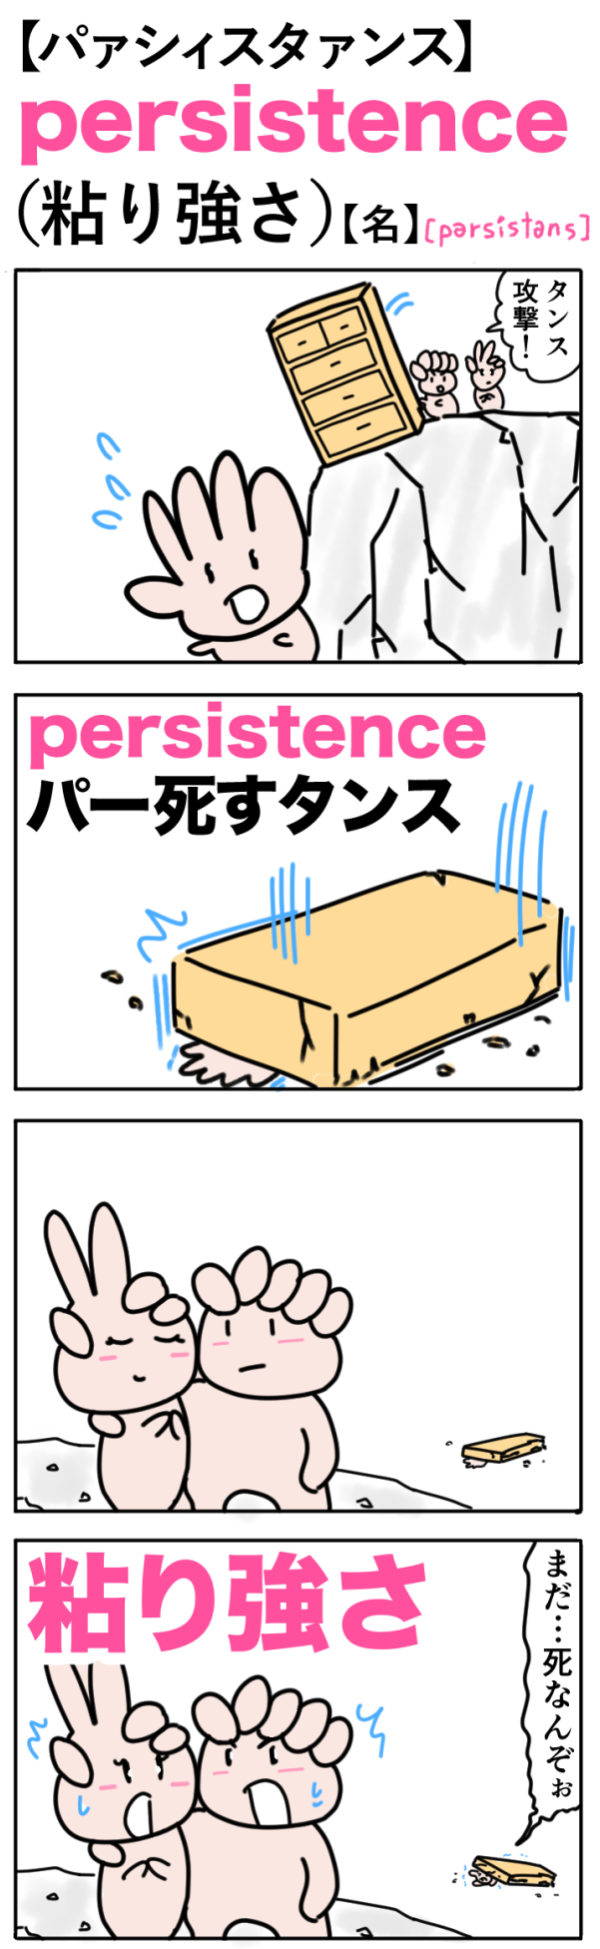 persistence（粘り強さ）の語呂合わせ英単語